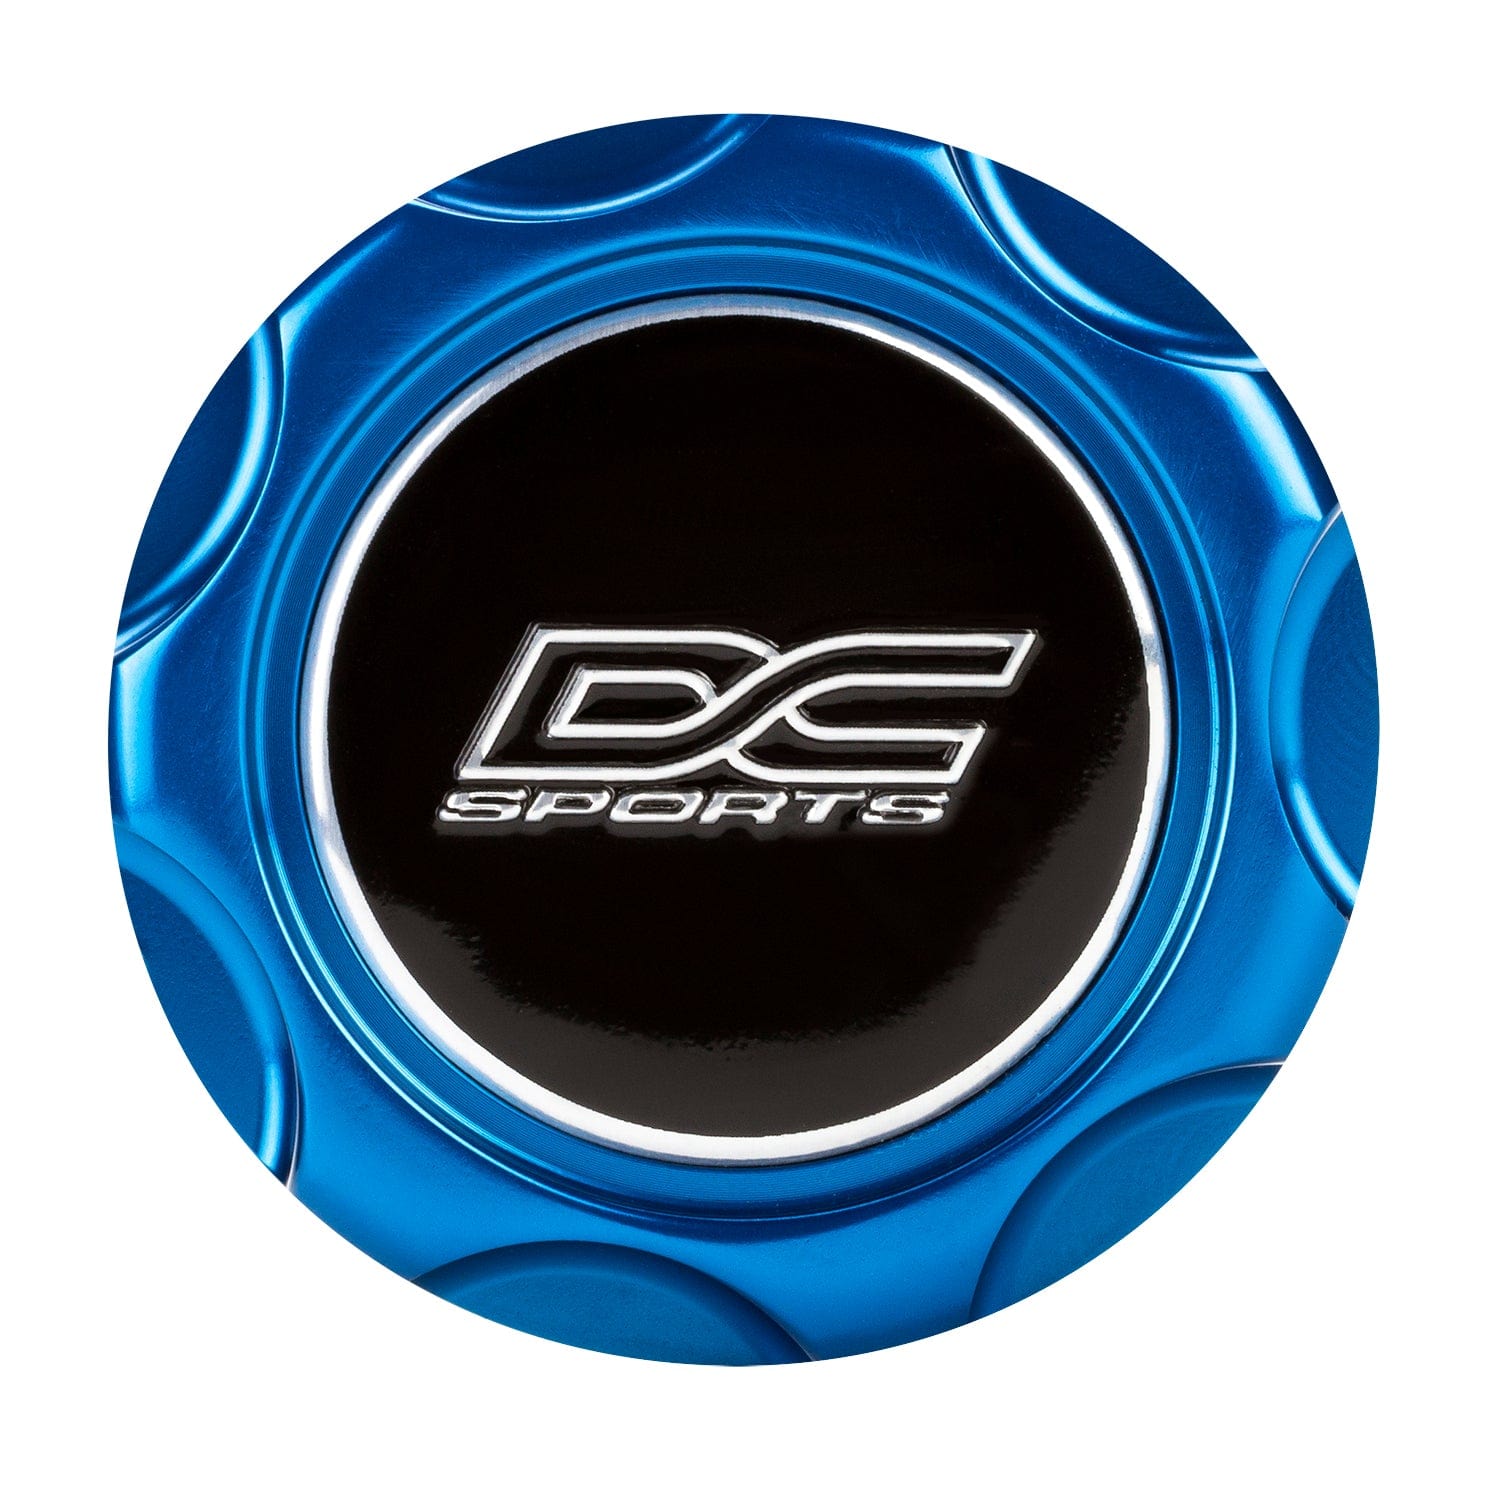 DC Sports Accessories DC Sport Anodized Oil Cap